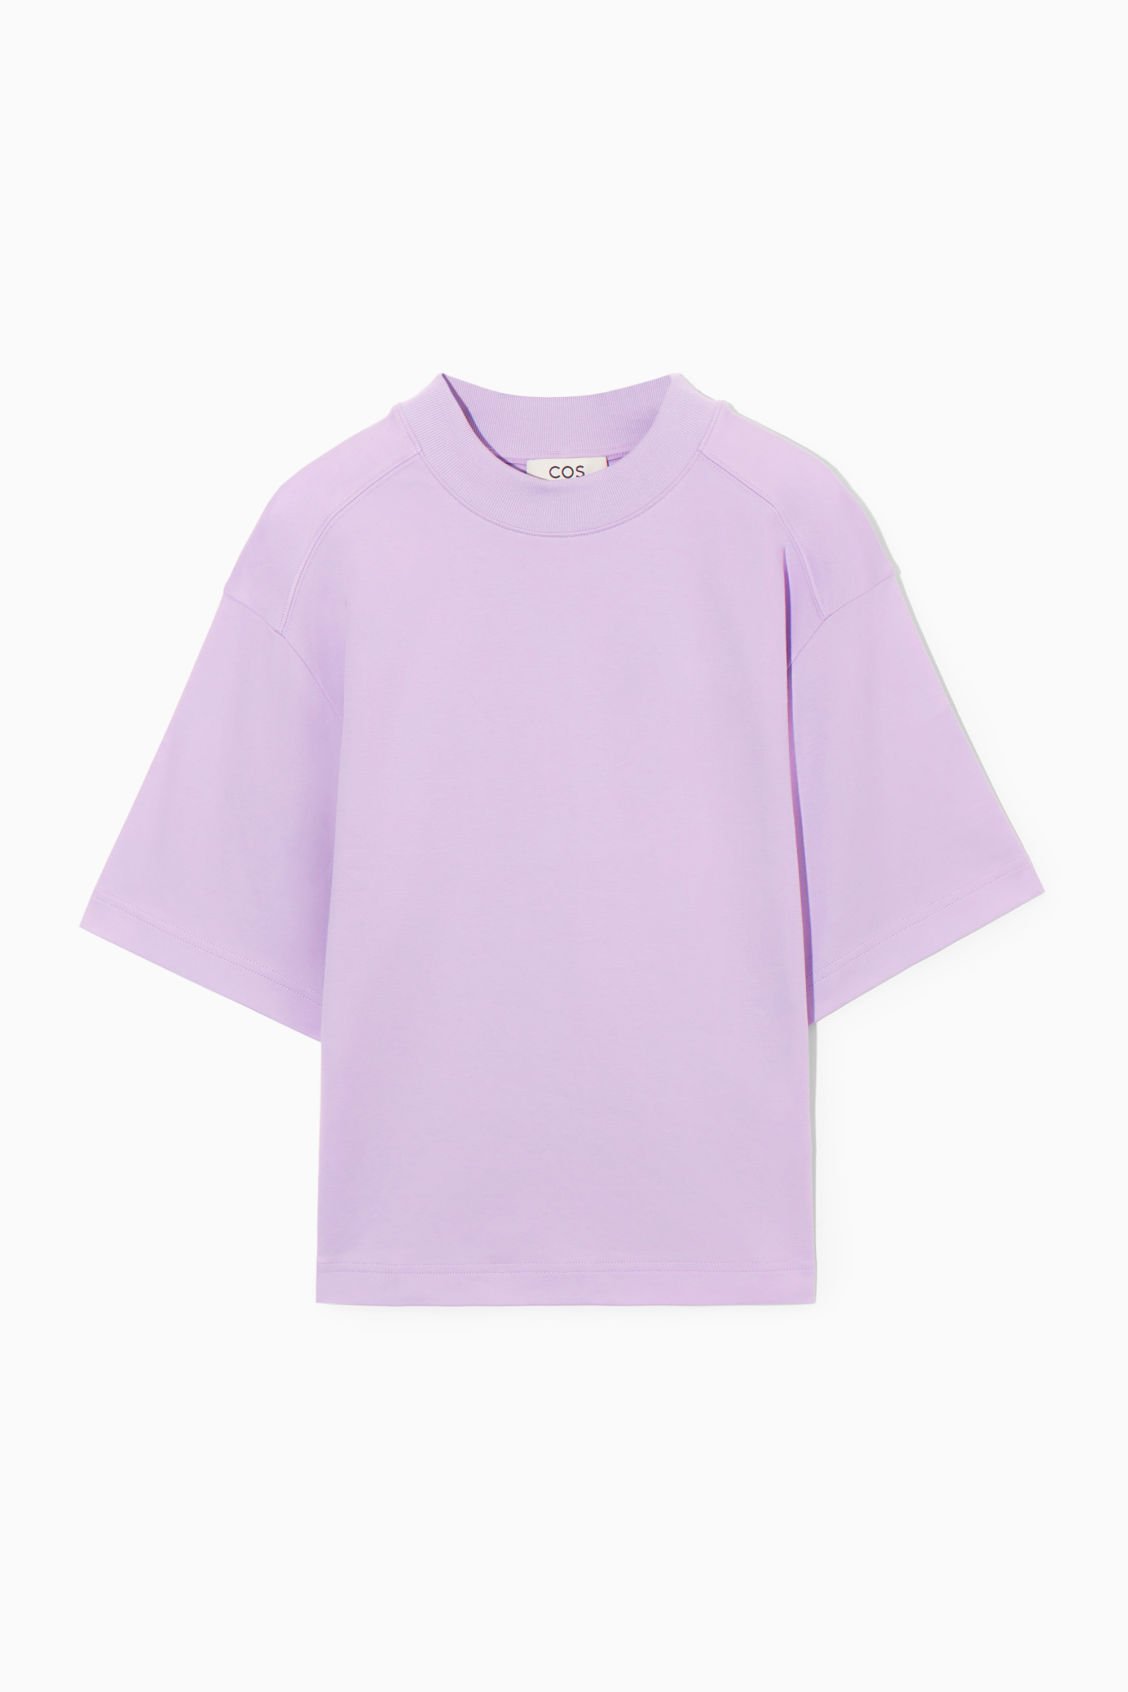 Purple Brand Coconut Milk 'Exit' T-Shirt